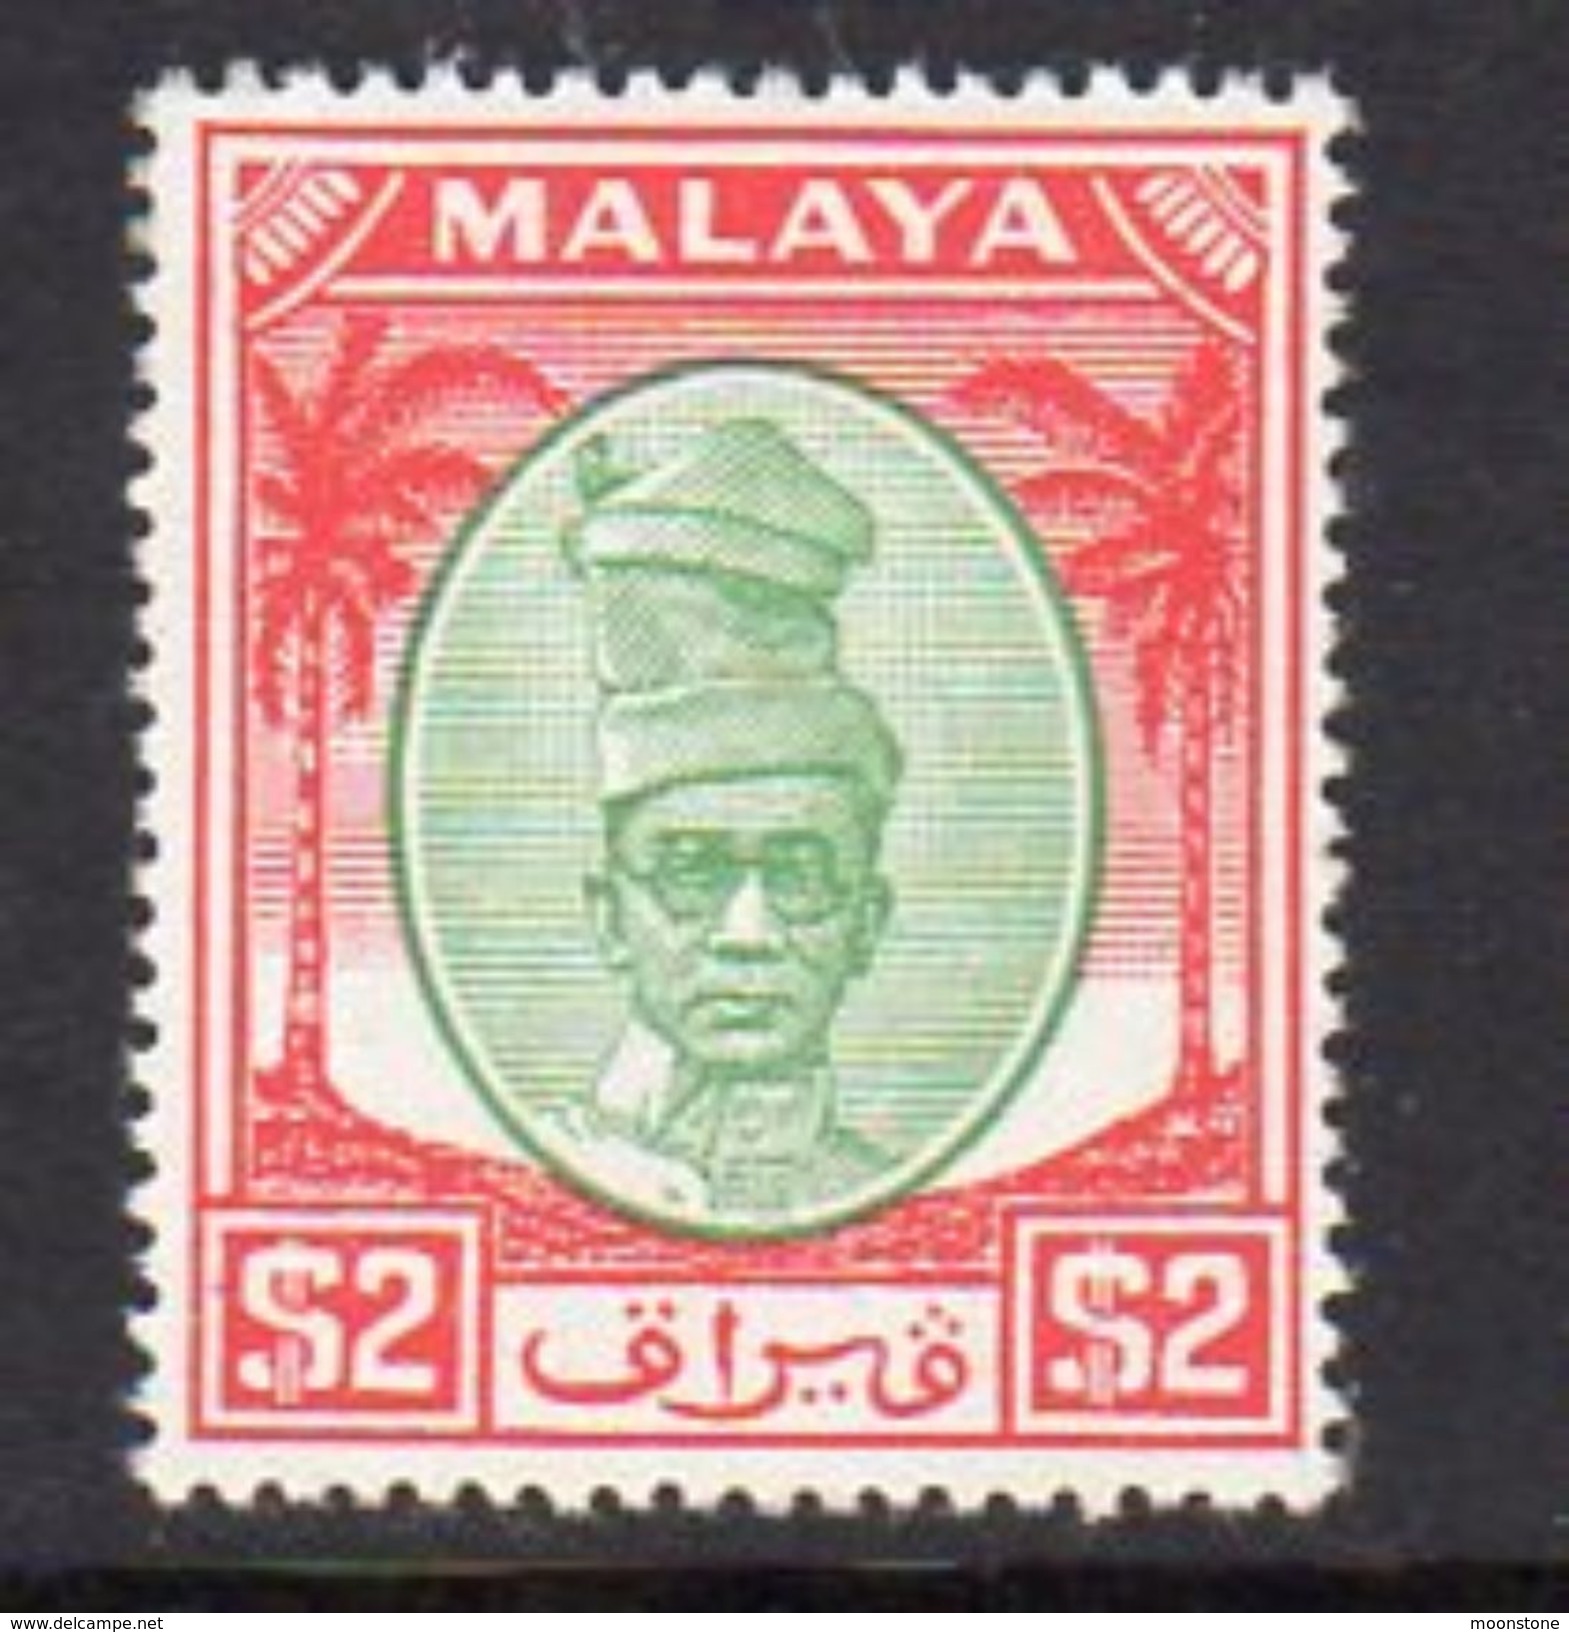 Malaya Perak 1950-6 Sultan Yussuf Izzzuddin Shah $2 Green & Scarlet, Hinged Mint, SG 147 - Perak